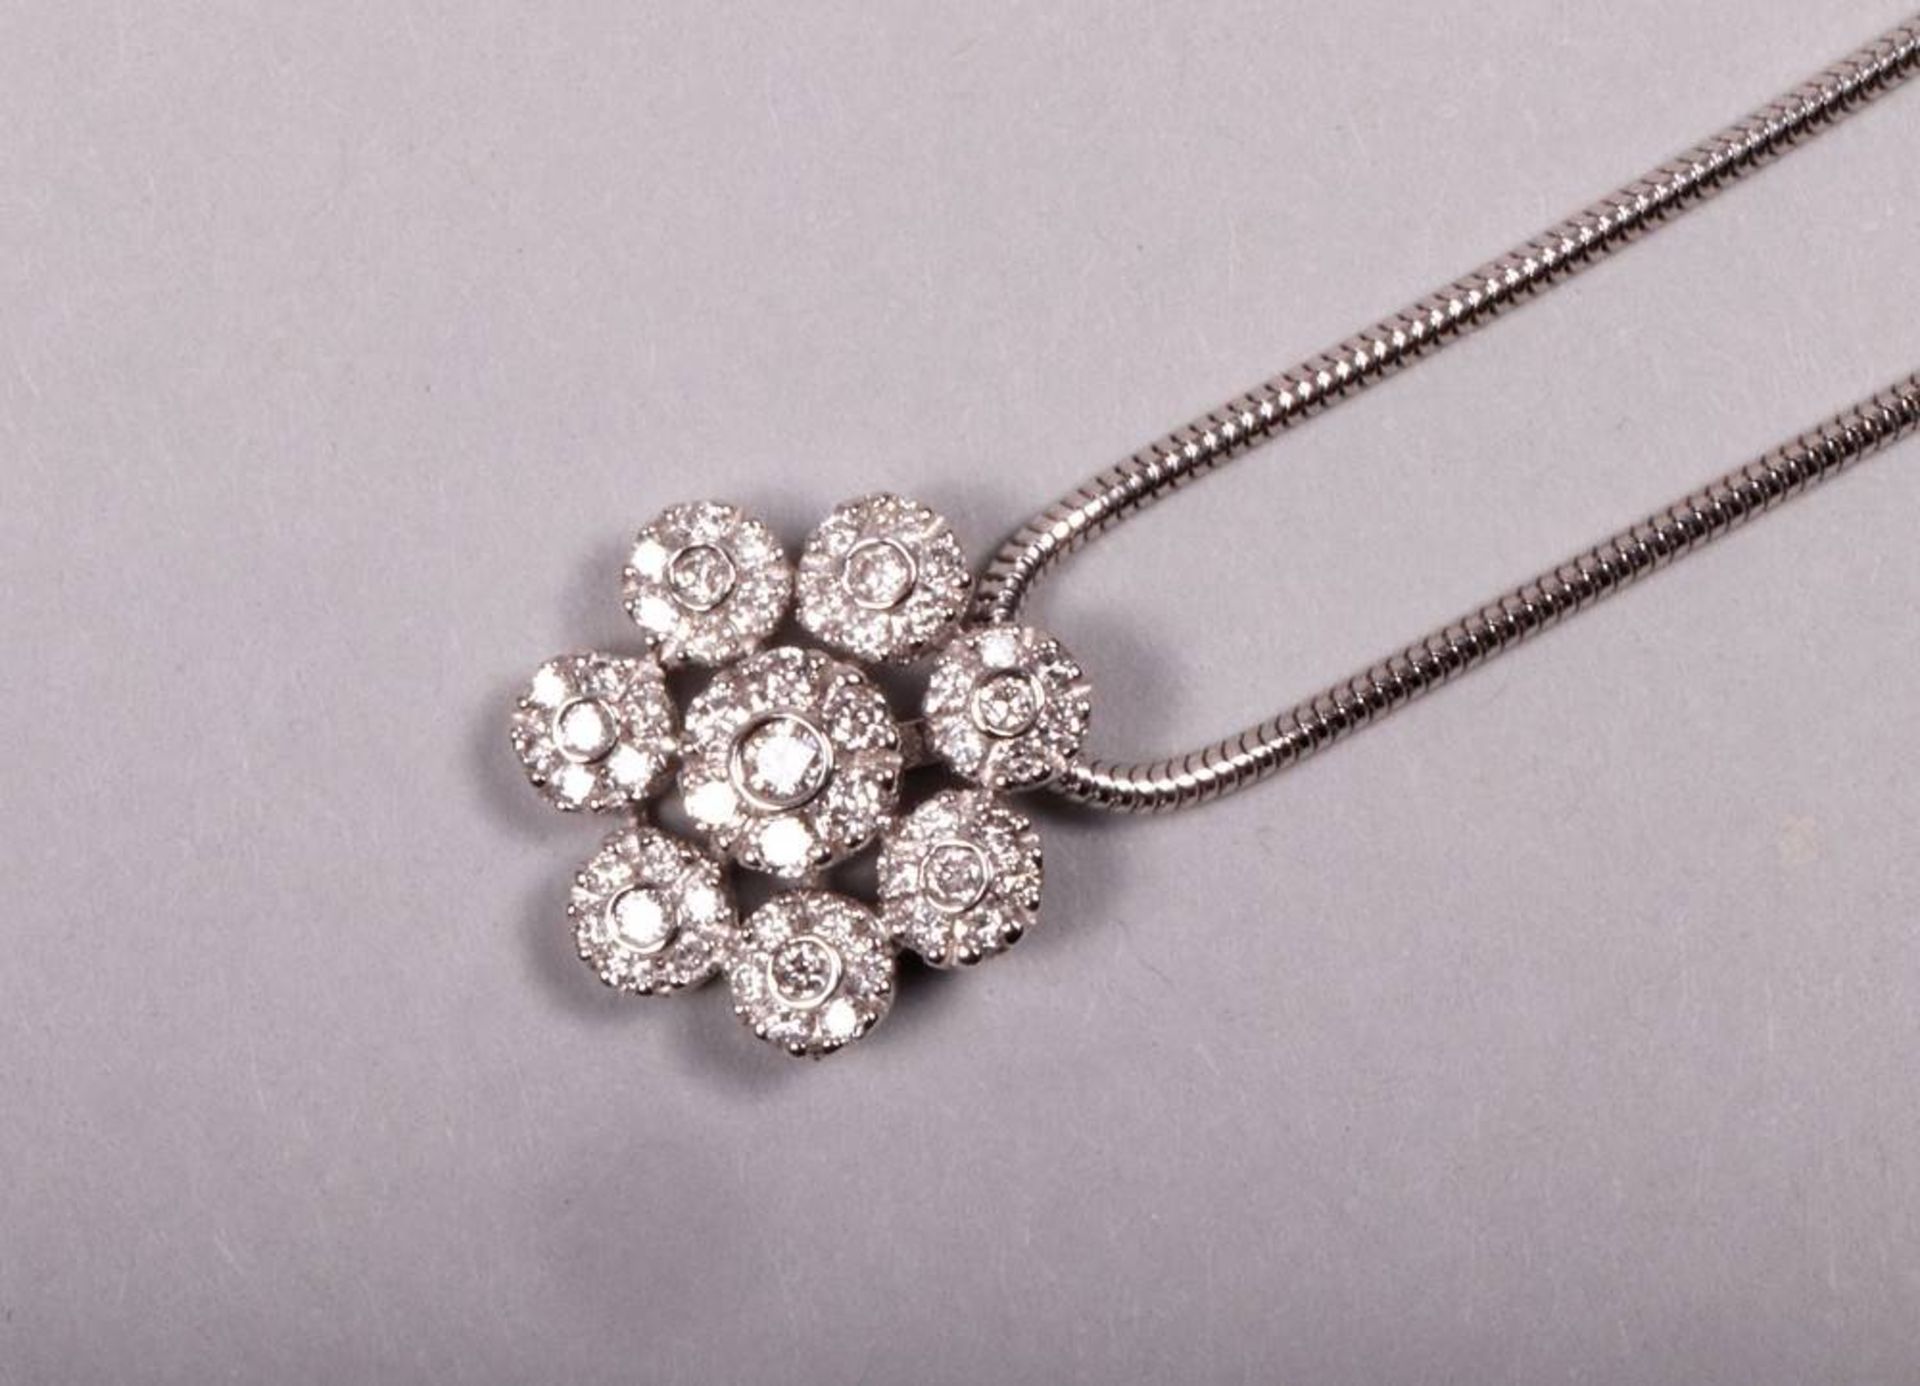 Collier750 white gold, flower shaped pendant, set with 55 brilliant cut diamonds, slightly tinted - Bild 3 aus 3